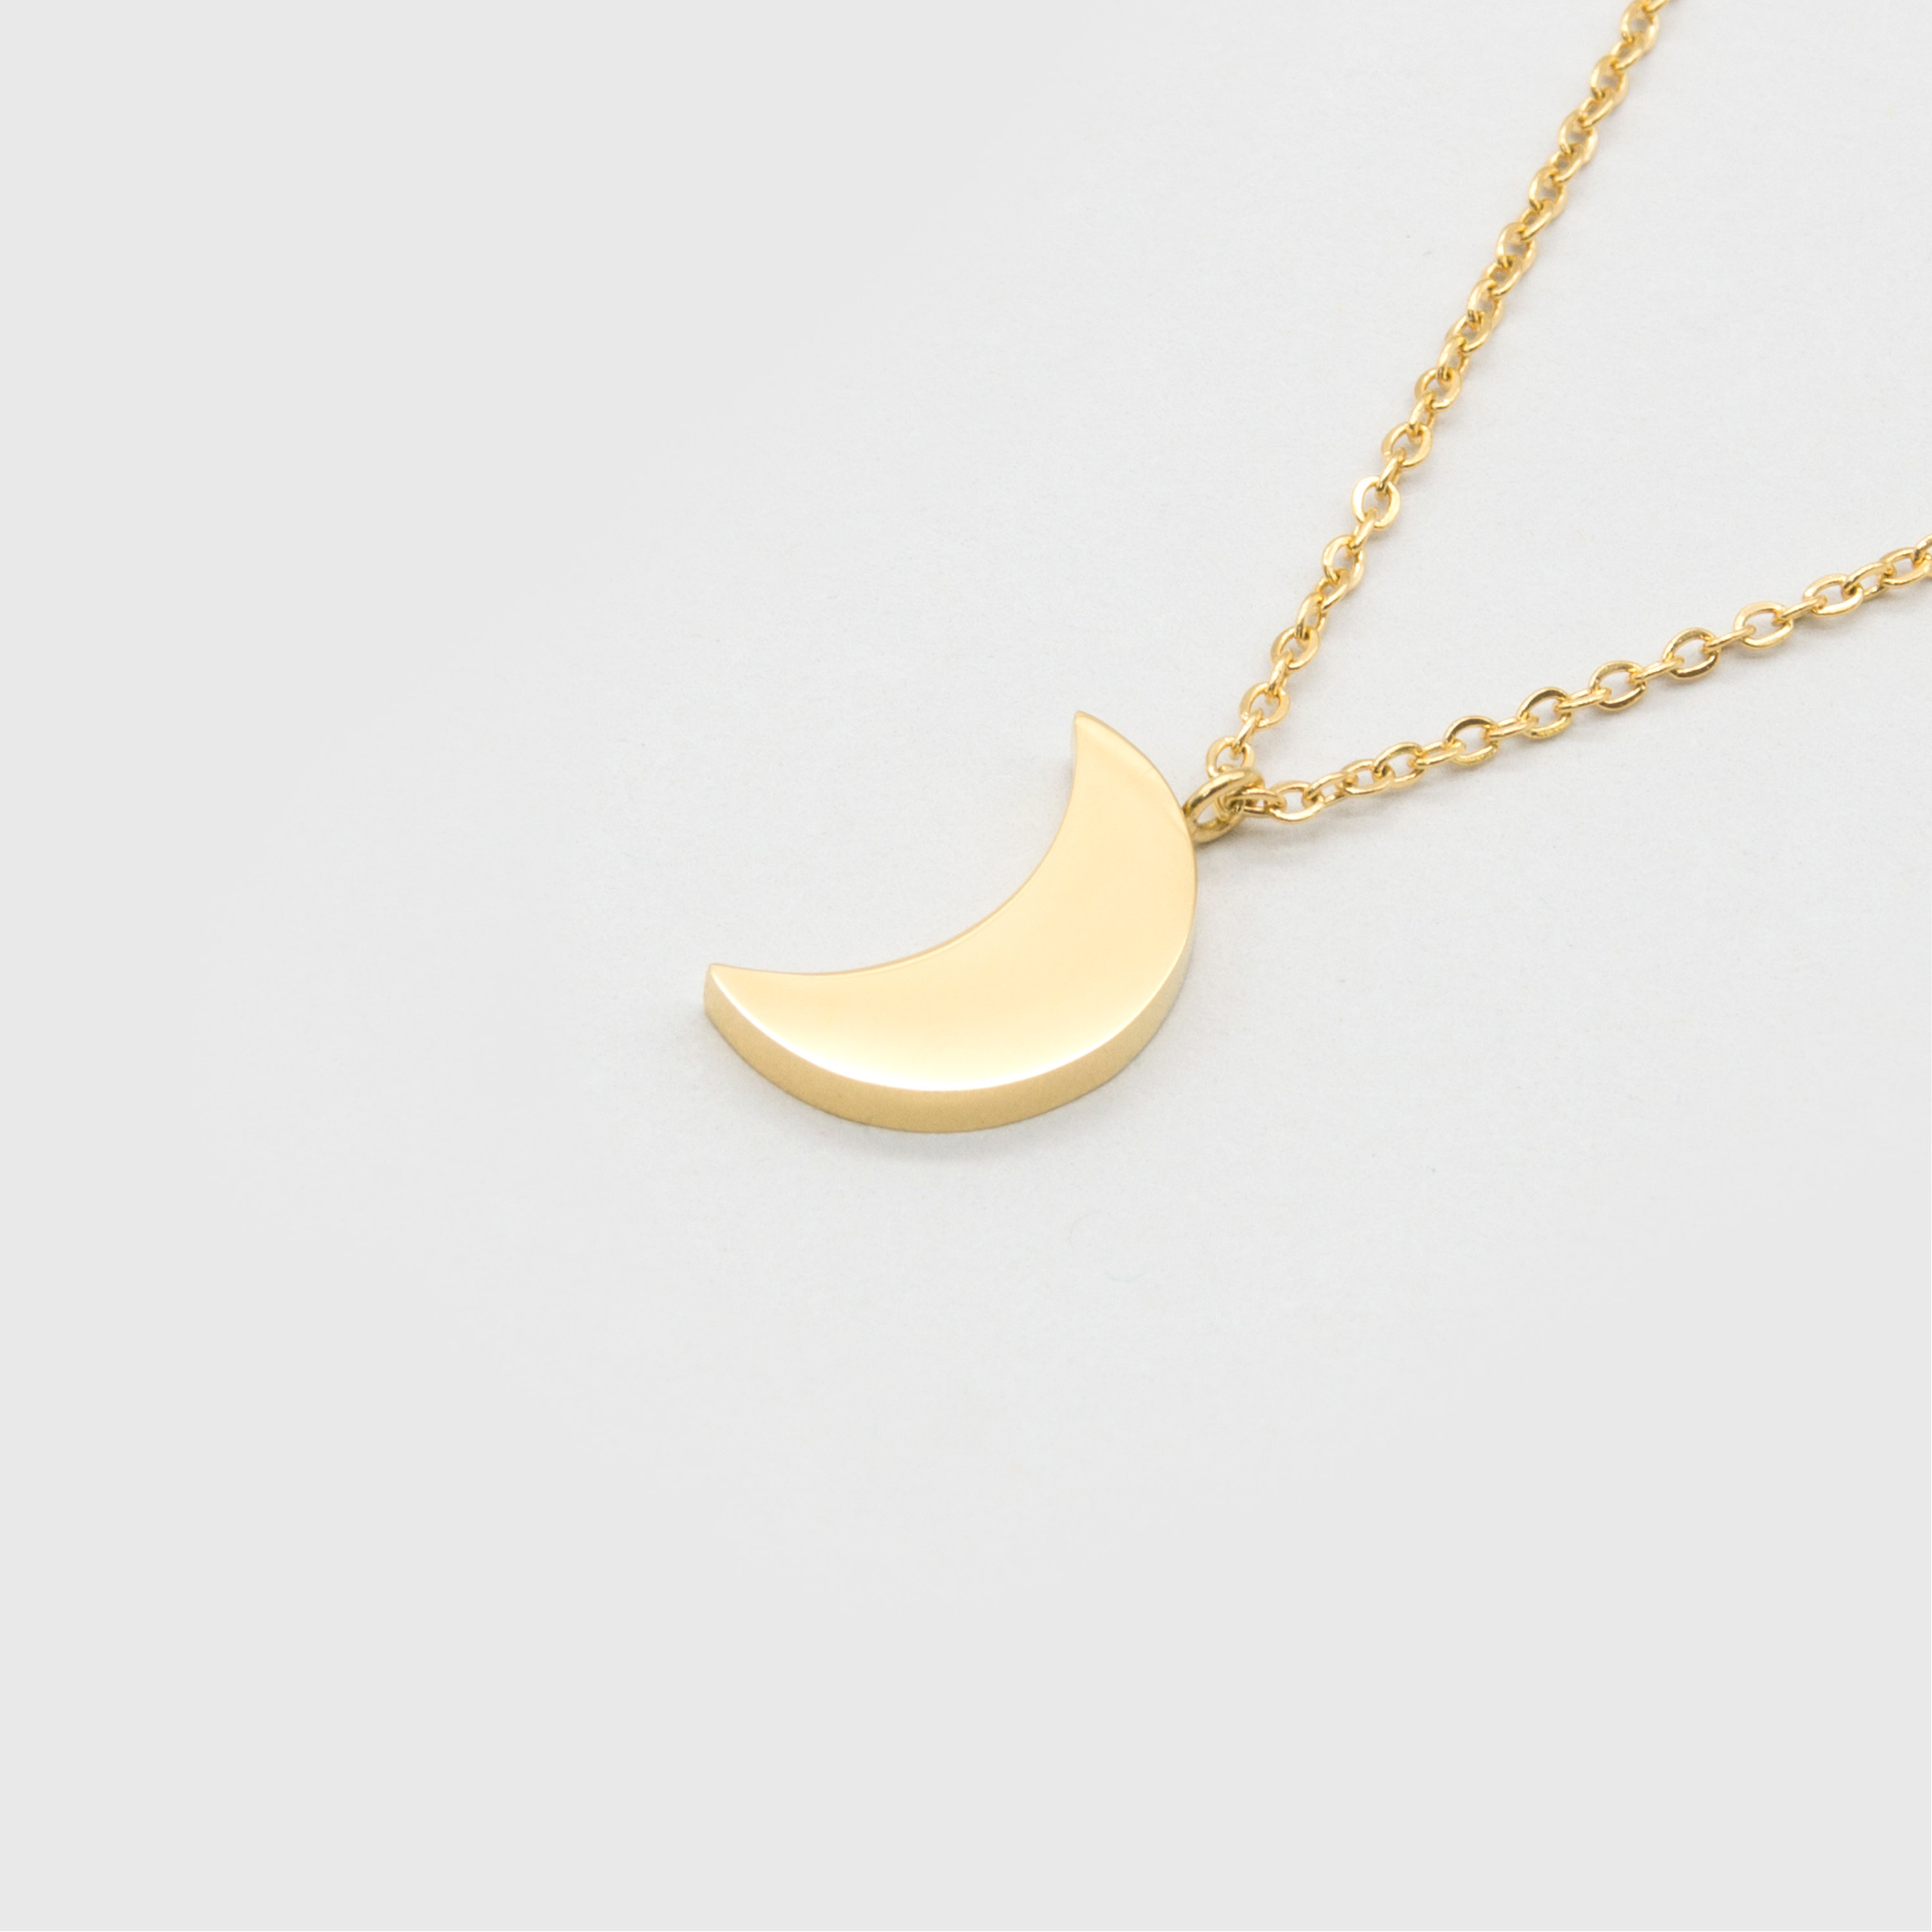 Kuku gold crescent moon necklace